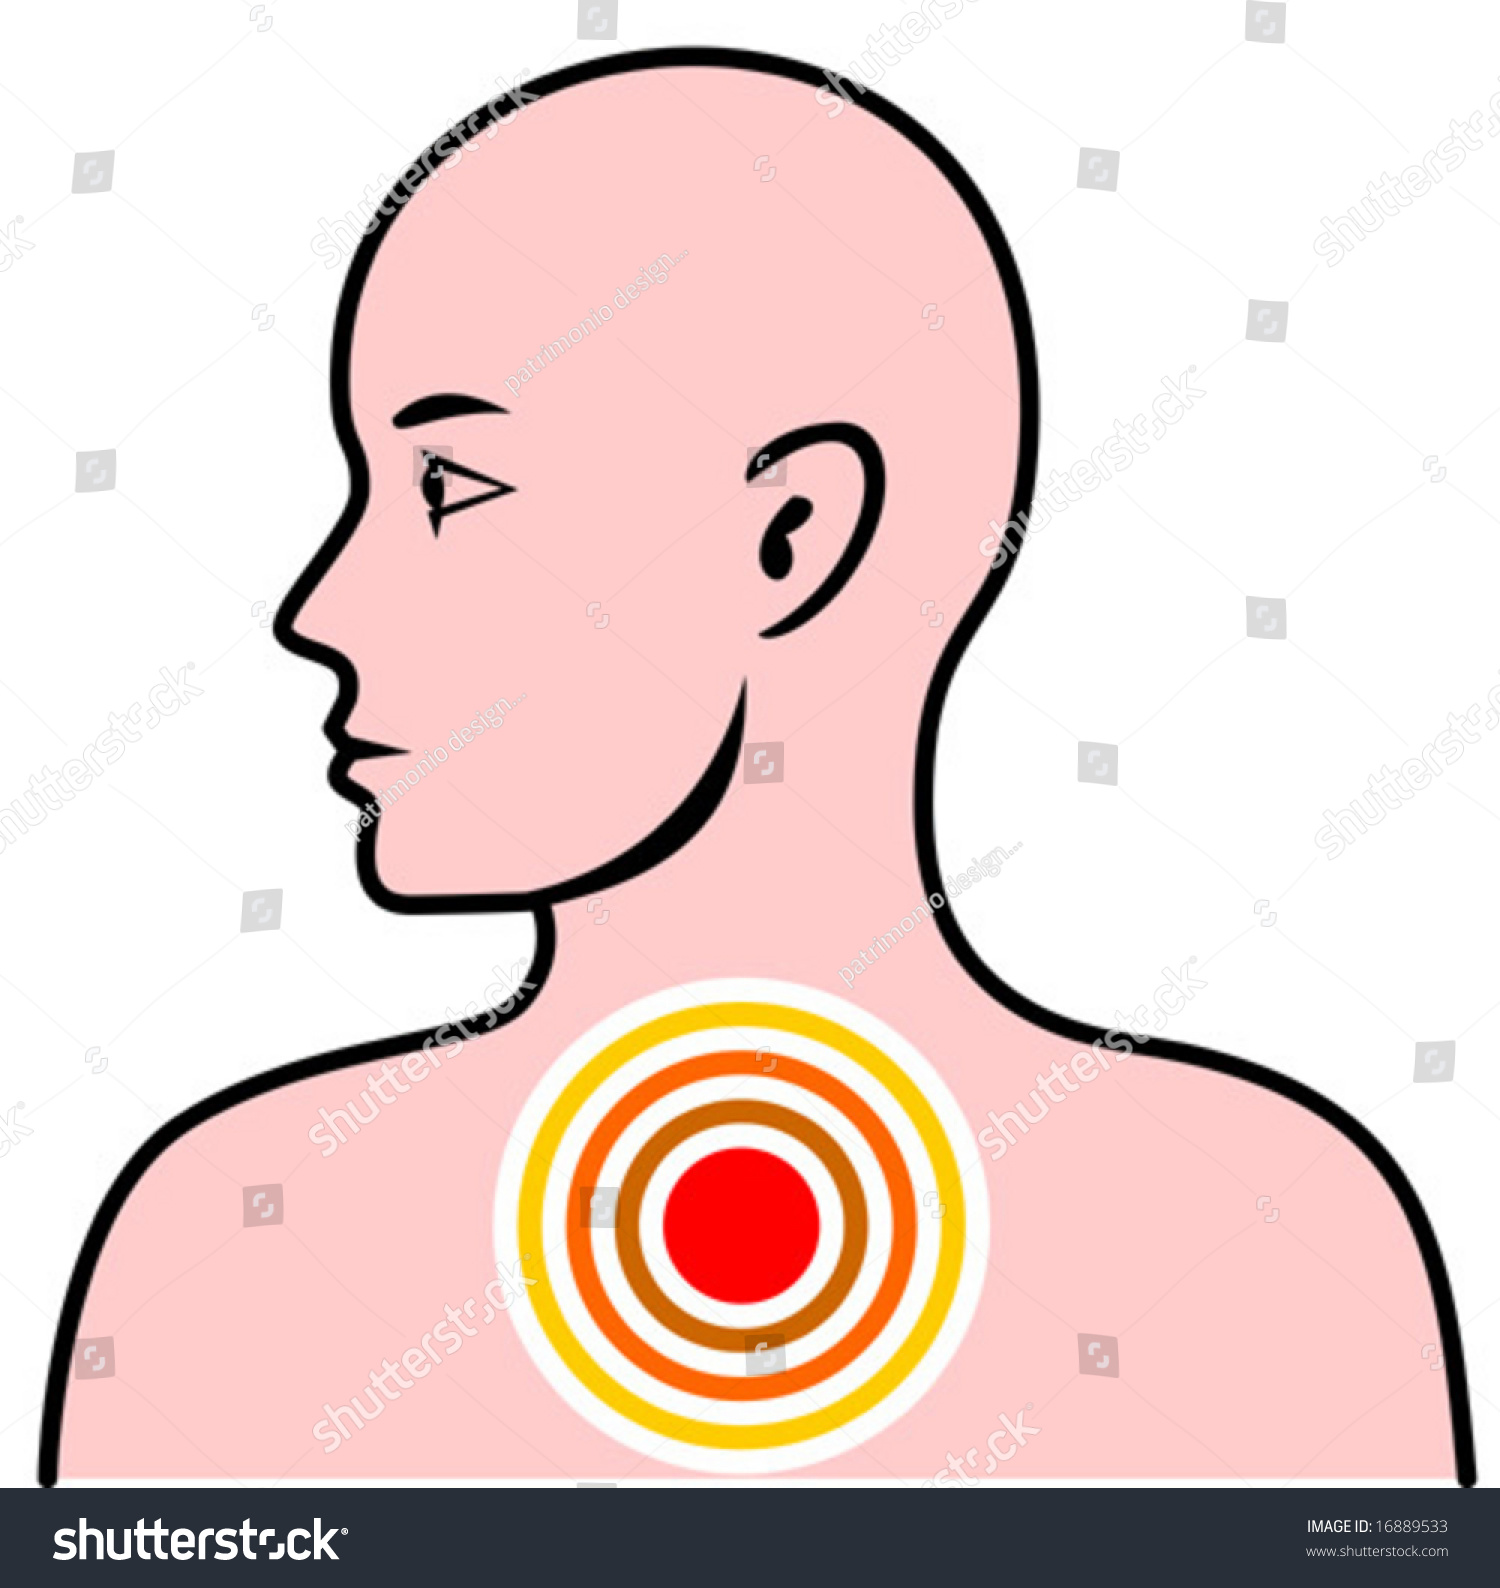 Human Anatomy Side Profile Stock Vector Illustration 16889533